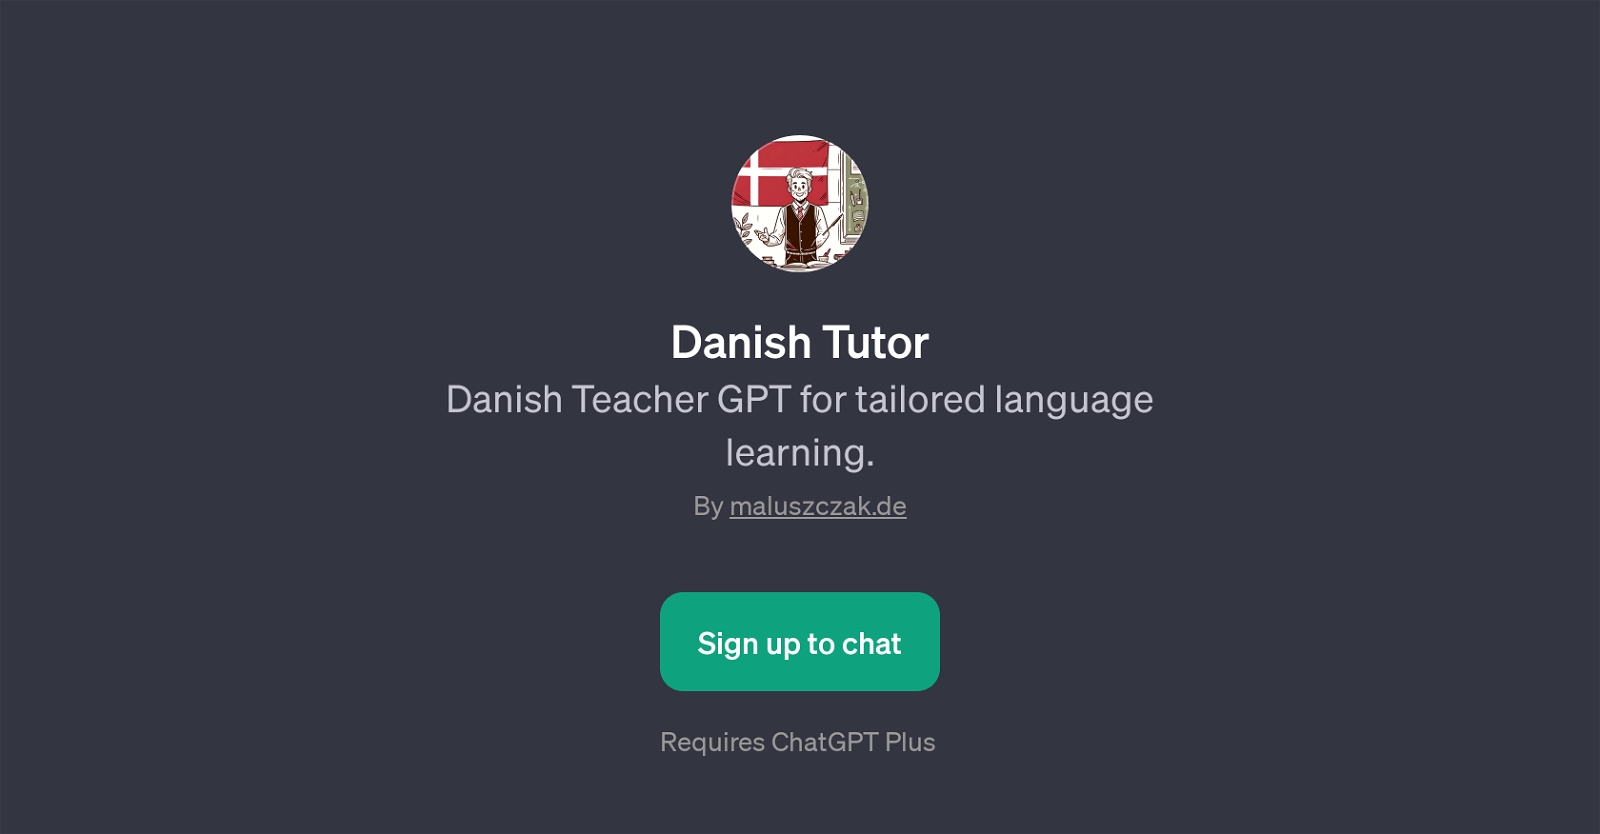 Danish Tutor website